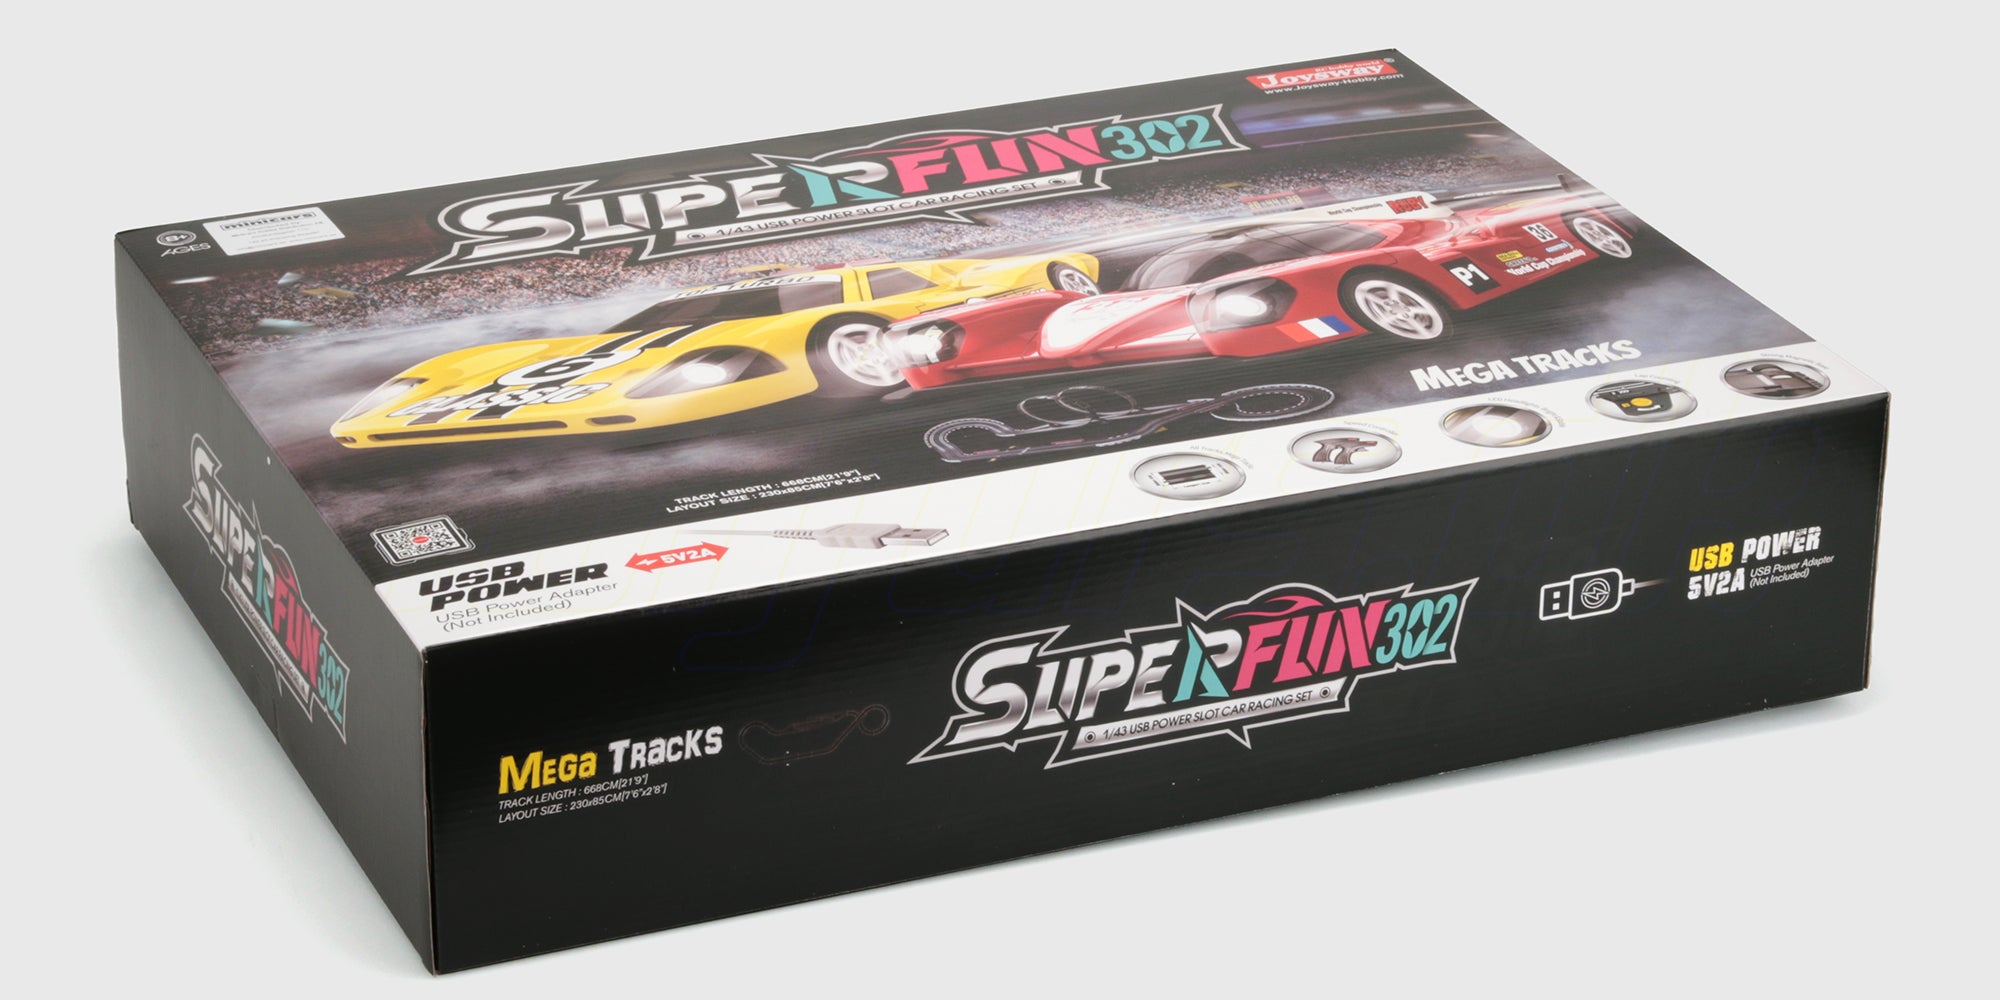 Racerbane Superfun 302